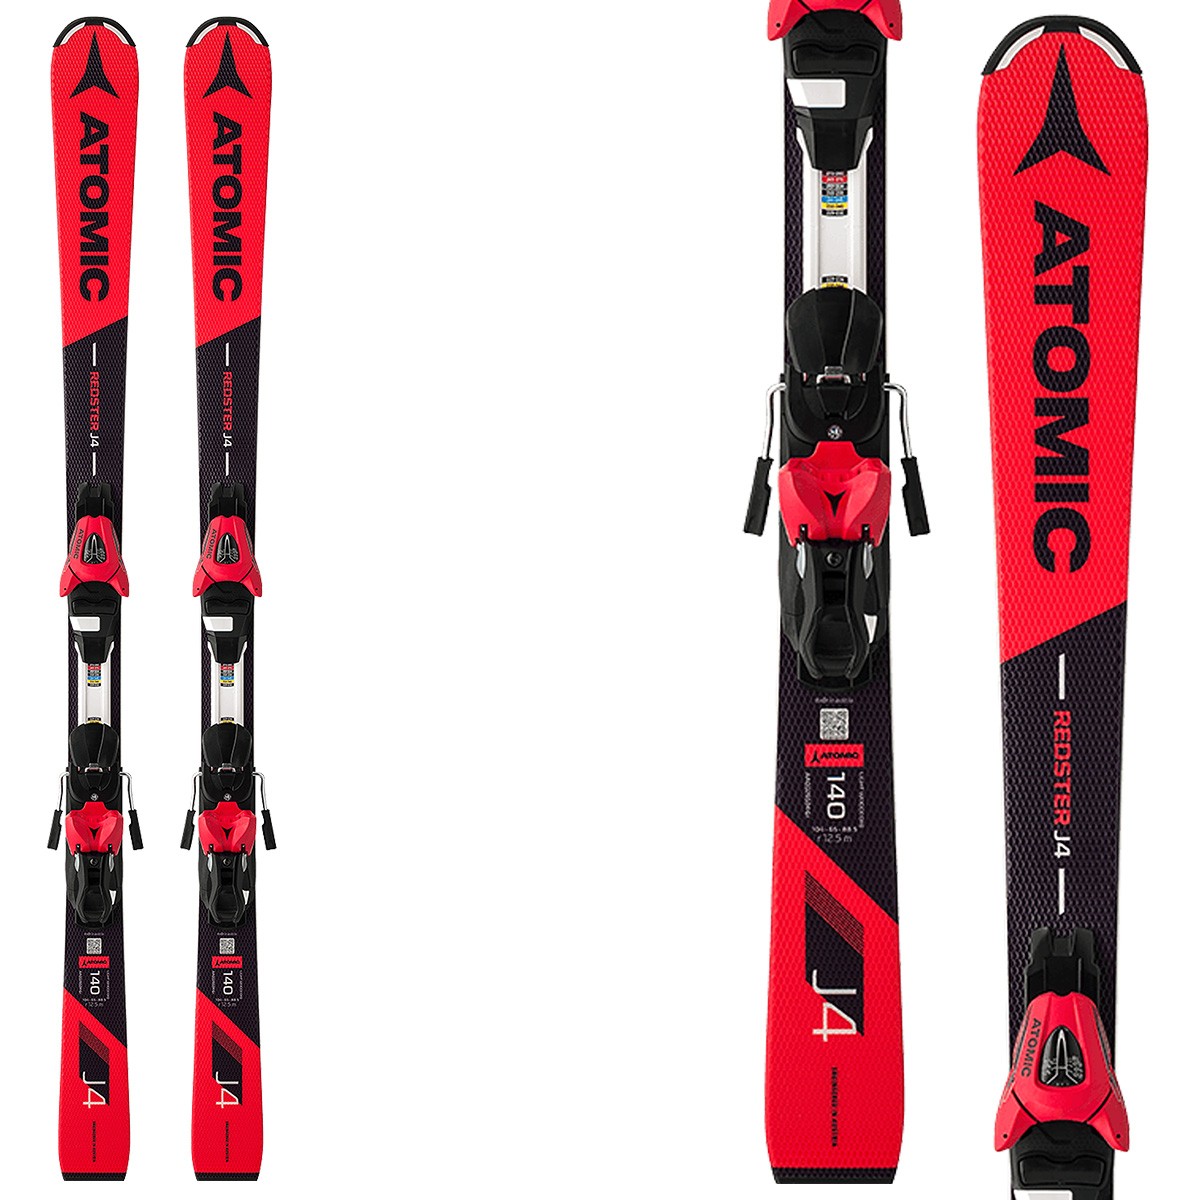 atomic skis for intermediate skiers